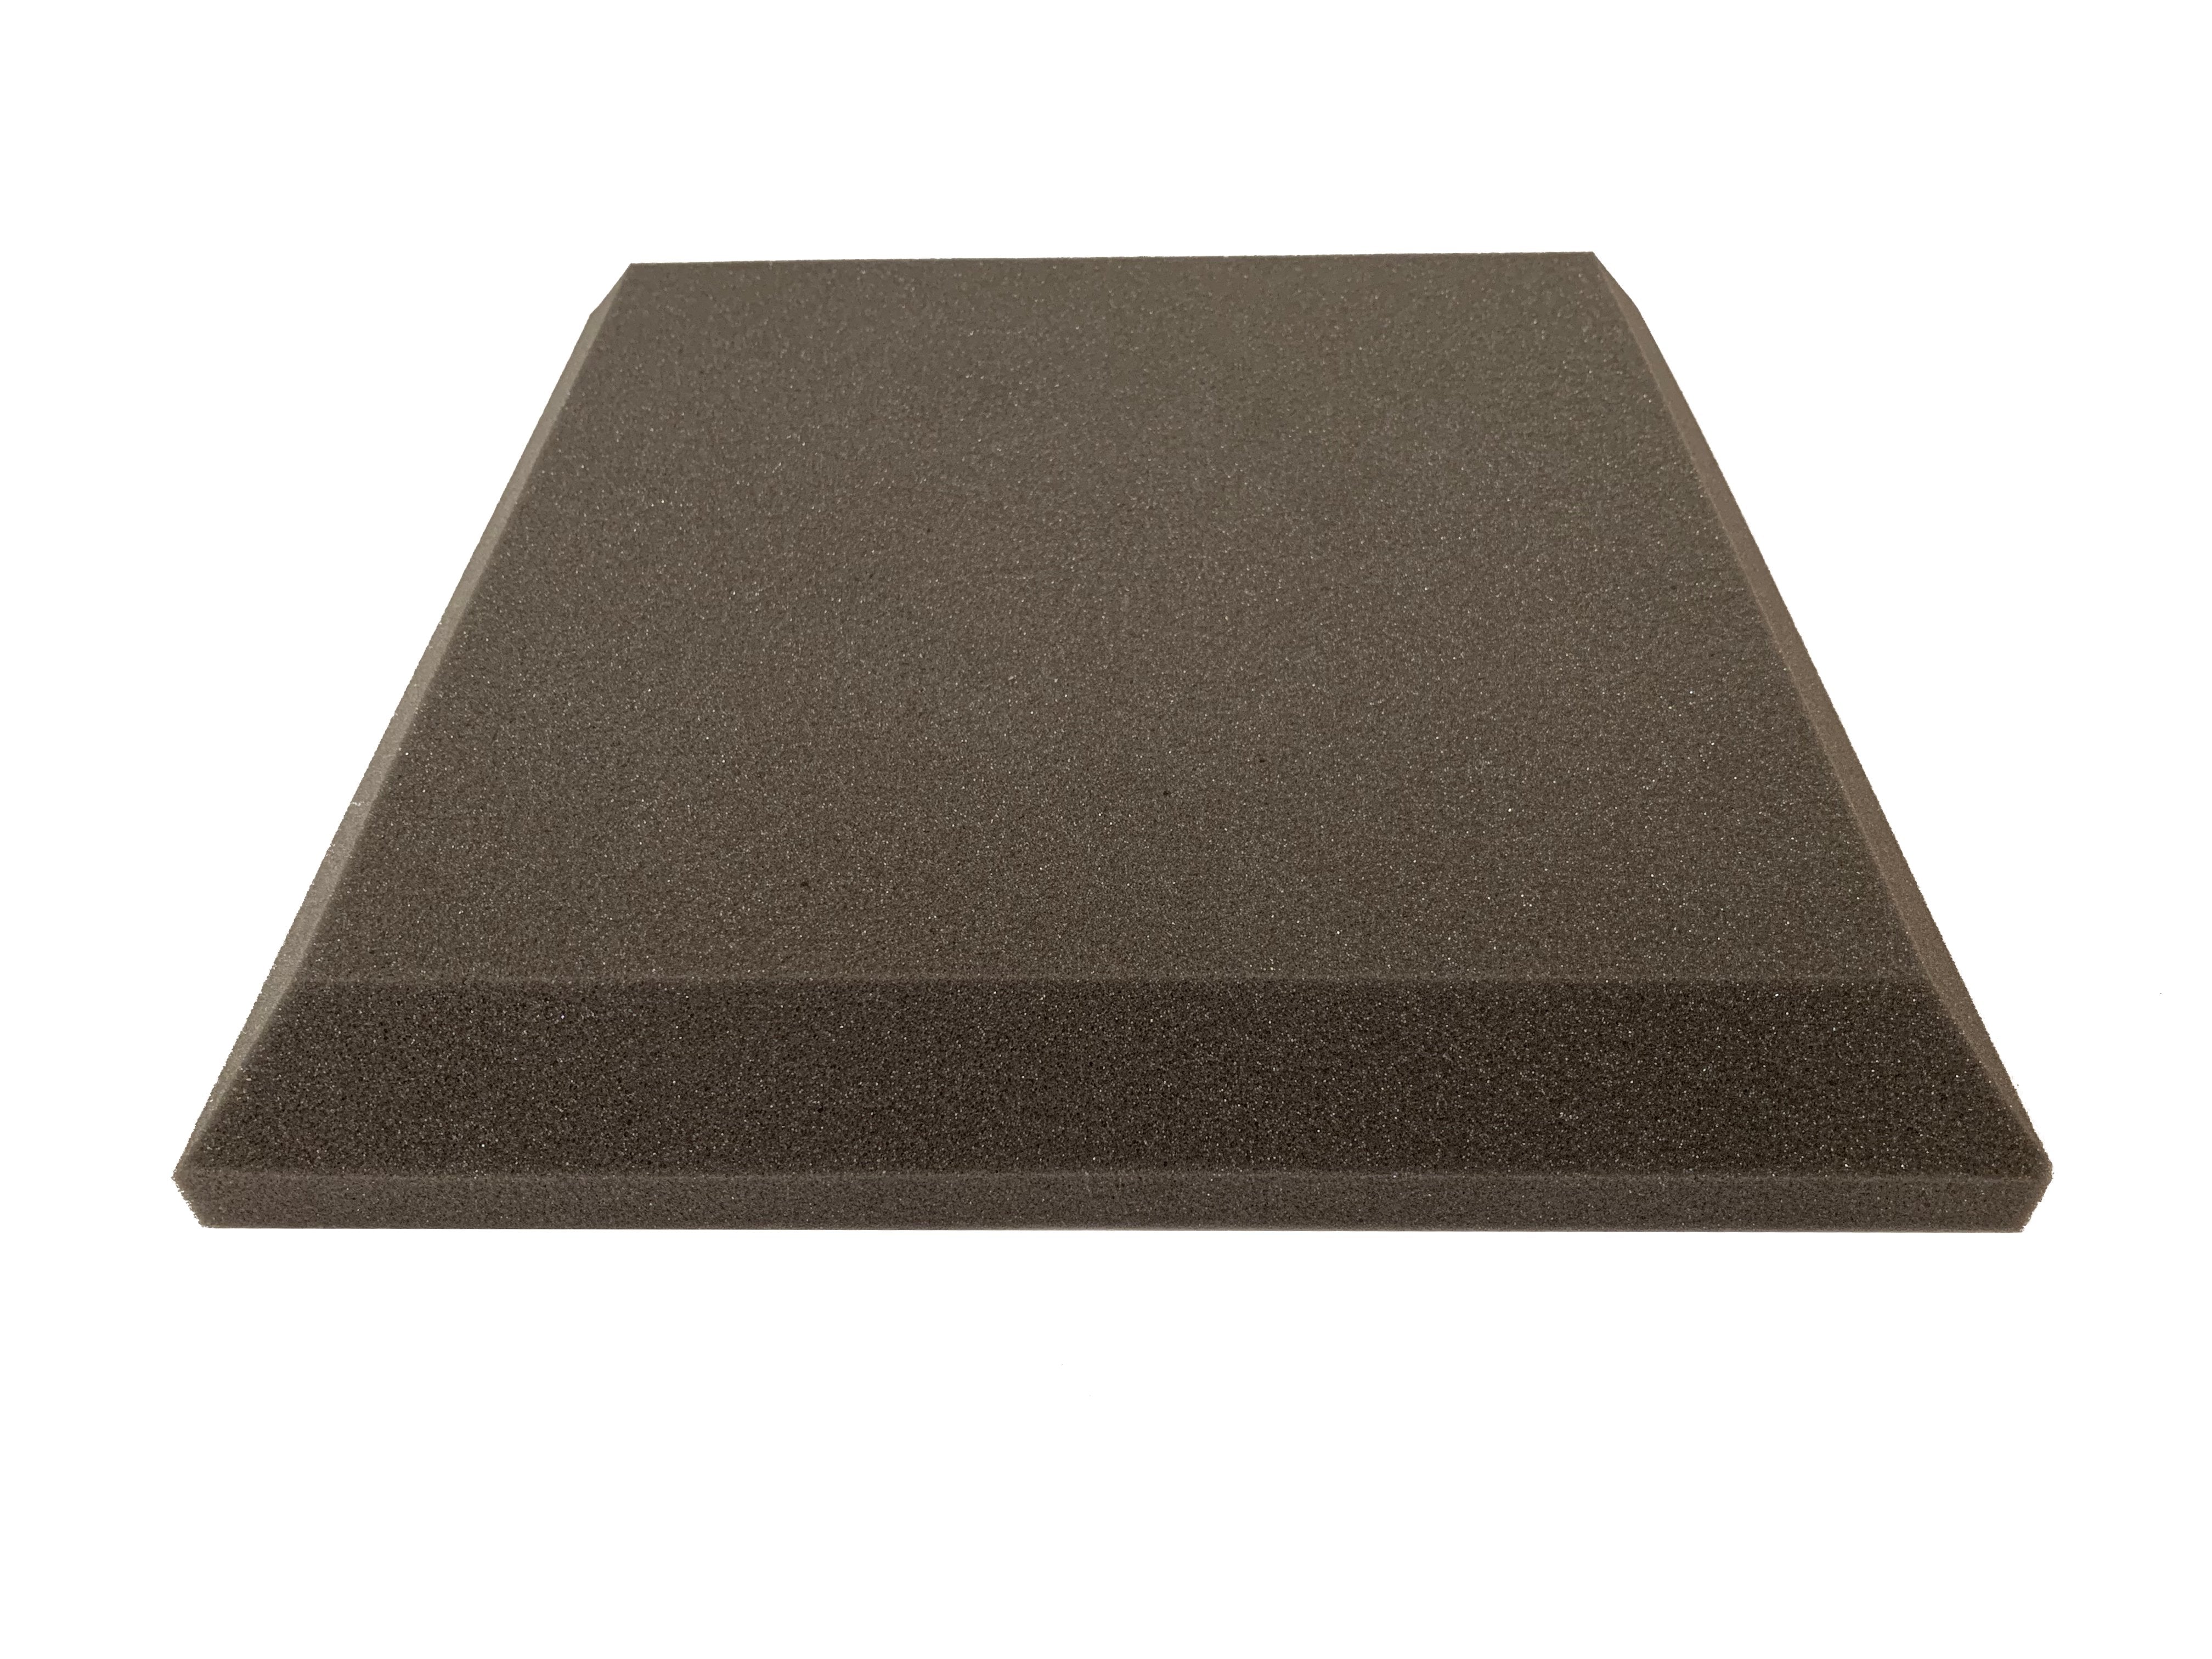 Tegular 2" Acoustic Studio Foam Tile Pack - Advanced Acoustics